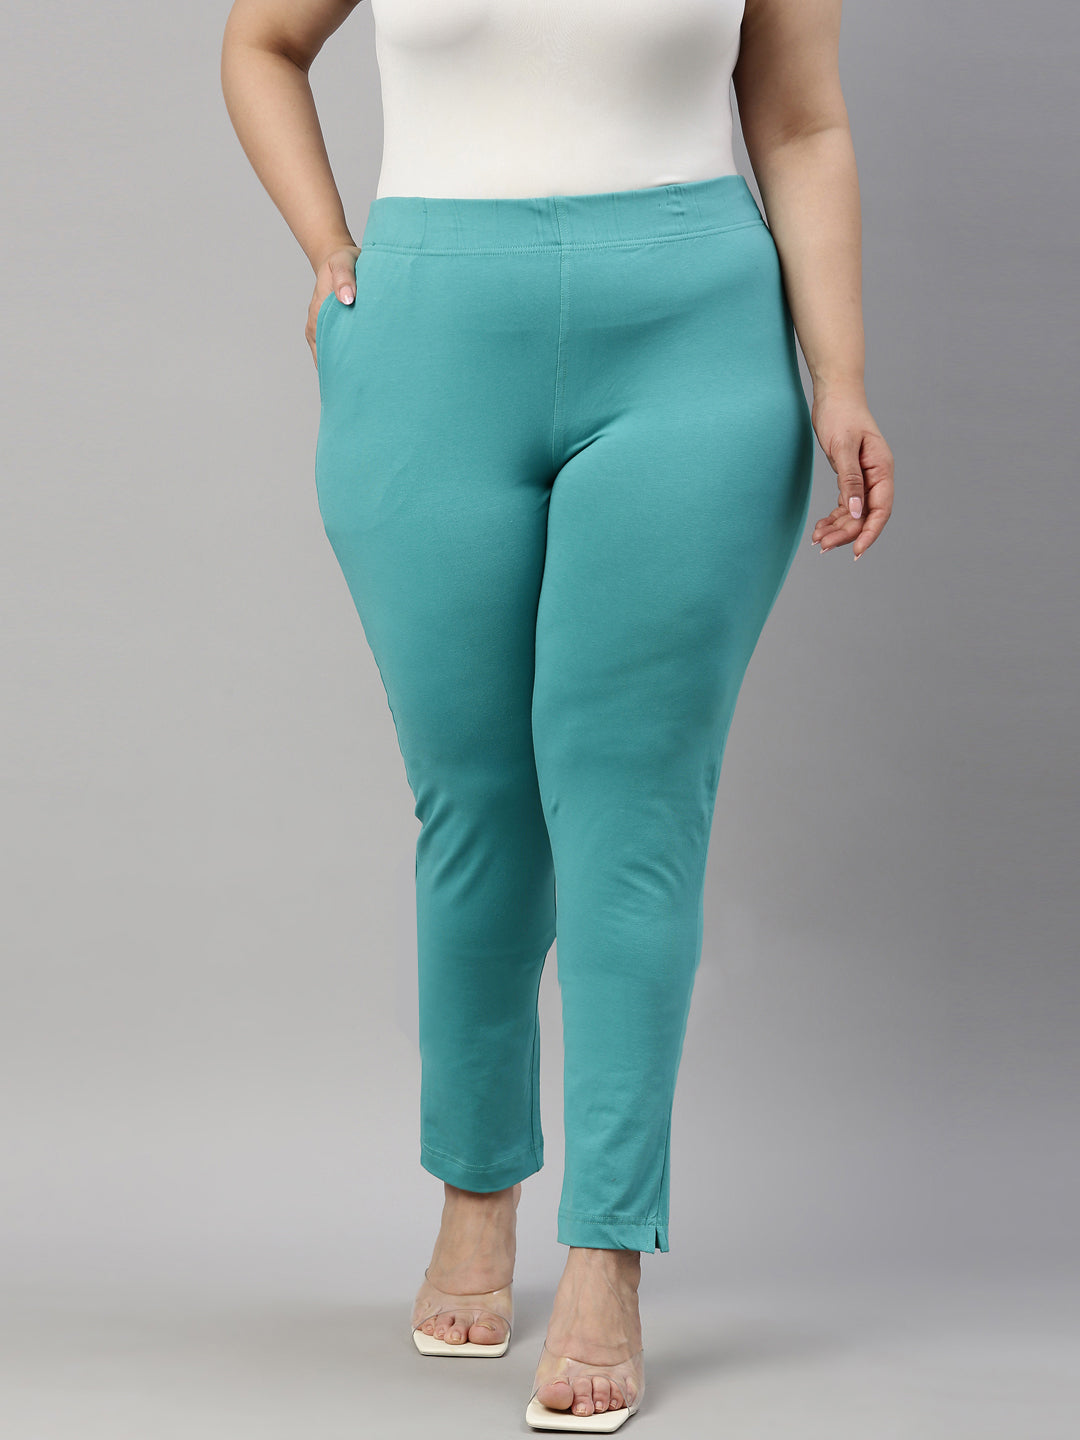 Go Colors ® Clothing Online Store: Buy Original Go Colors Pants and  Leggings: AJIO